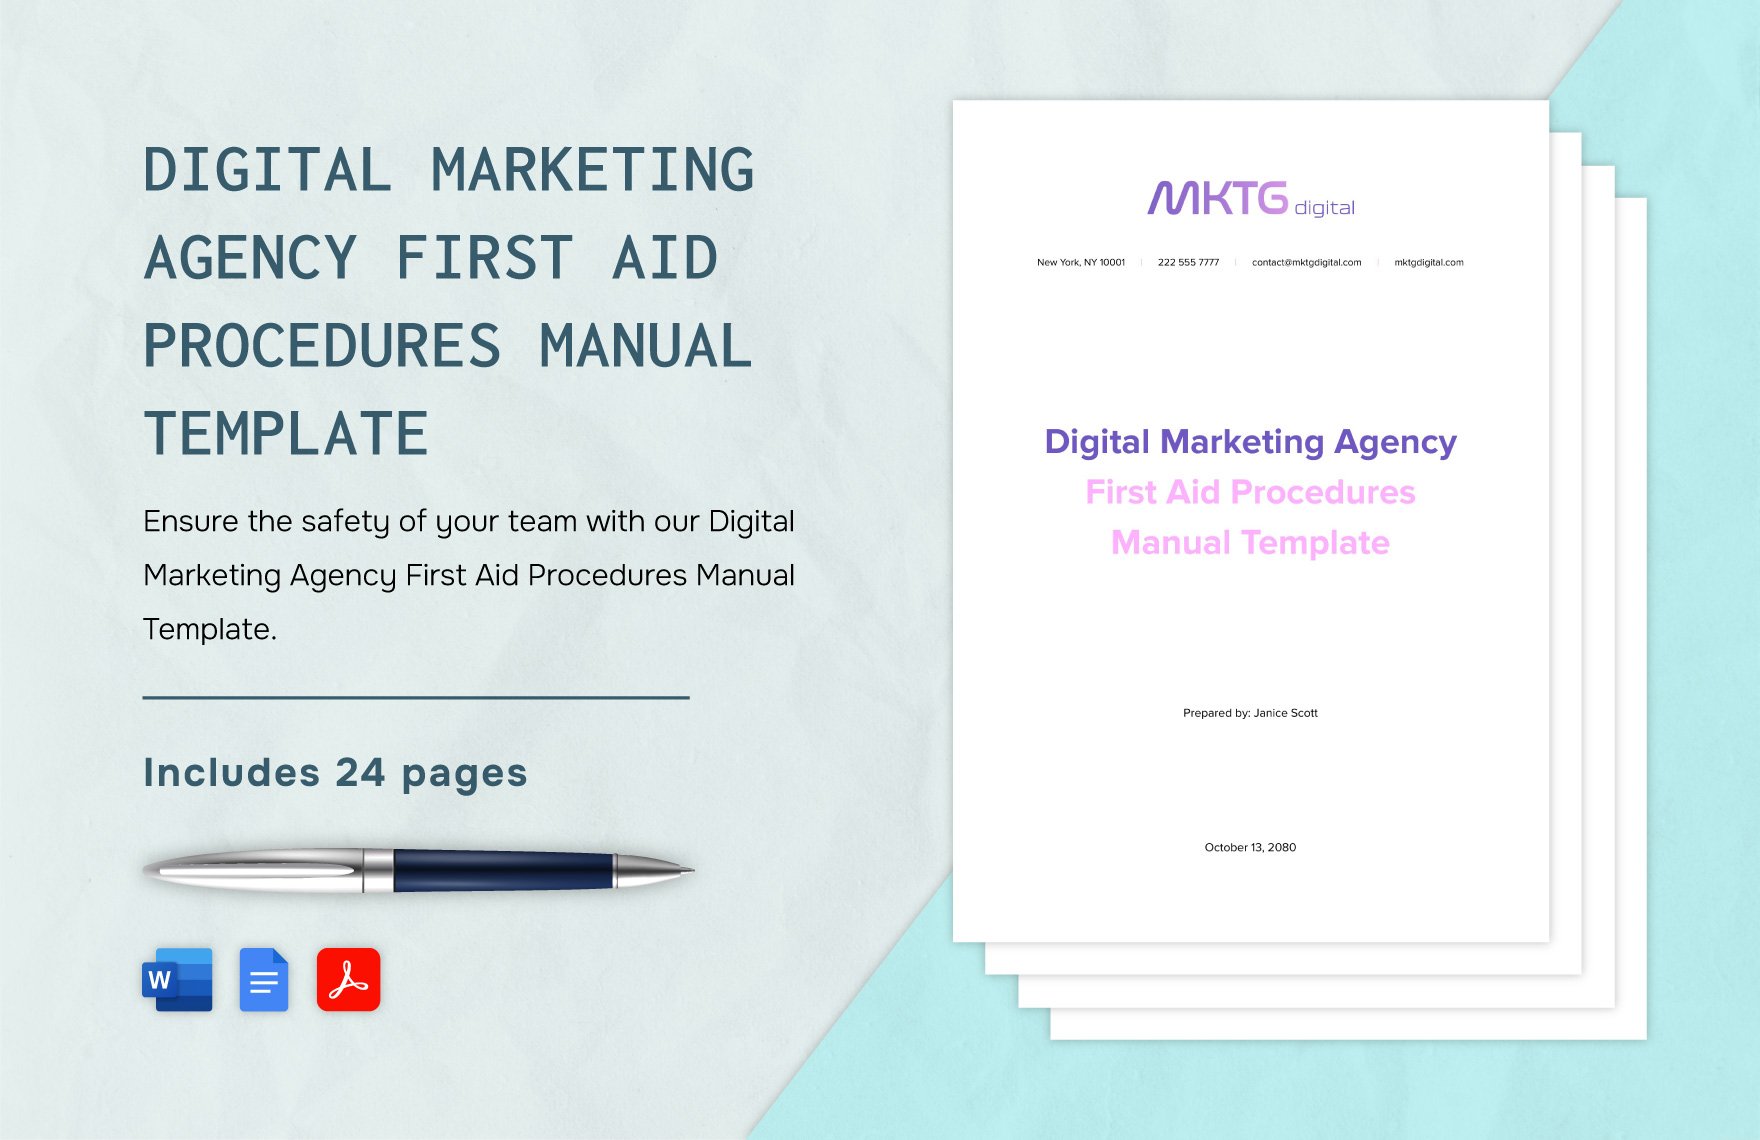 Digital Marketing Agency First Aid Procedures Manual Template